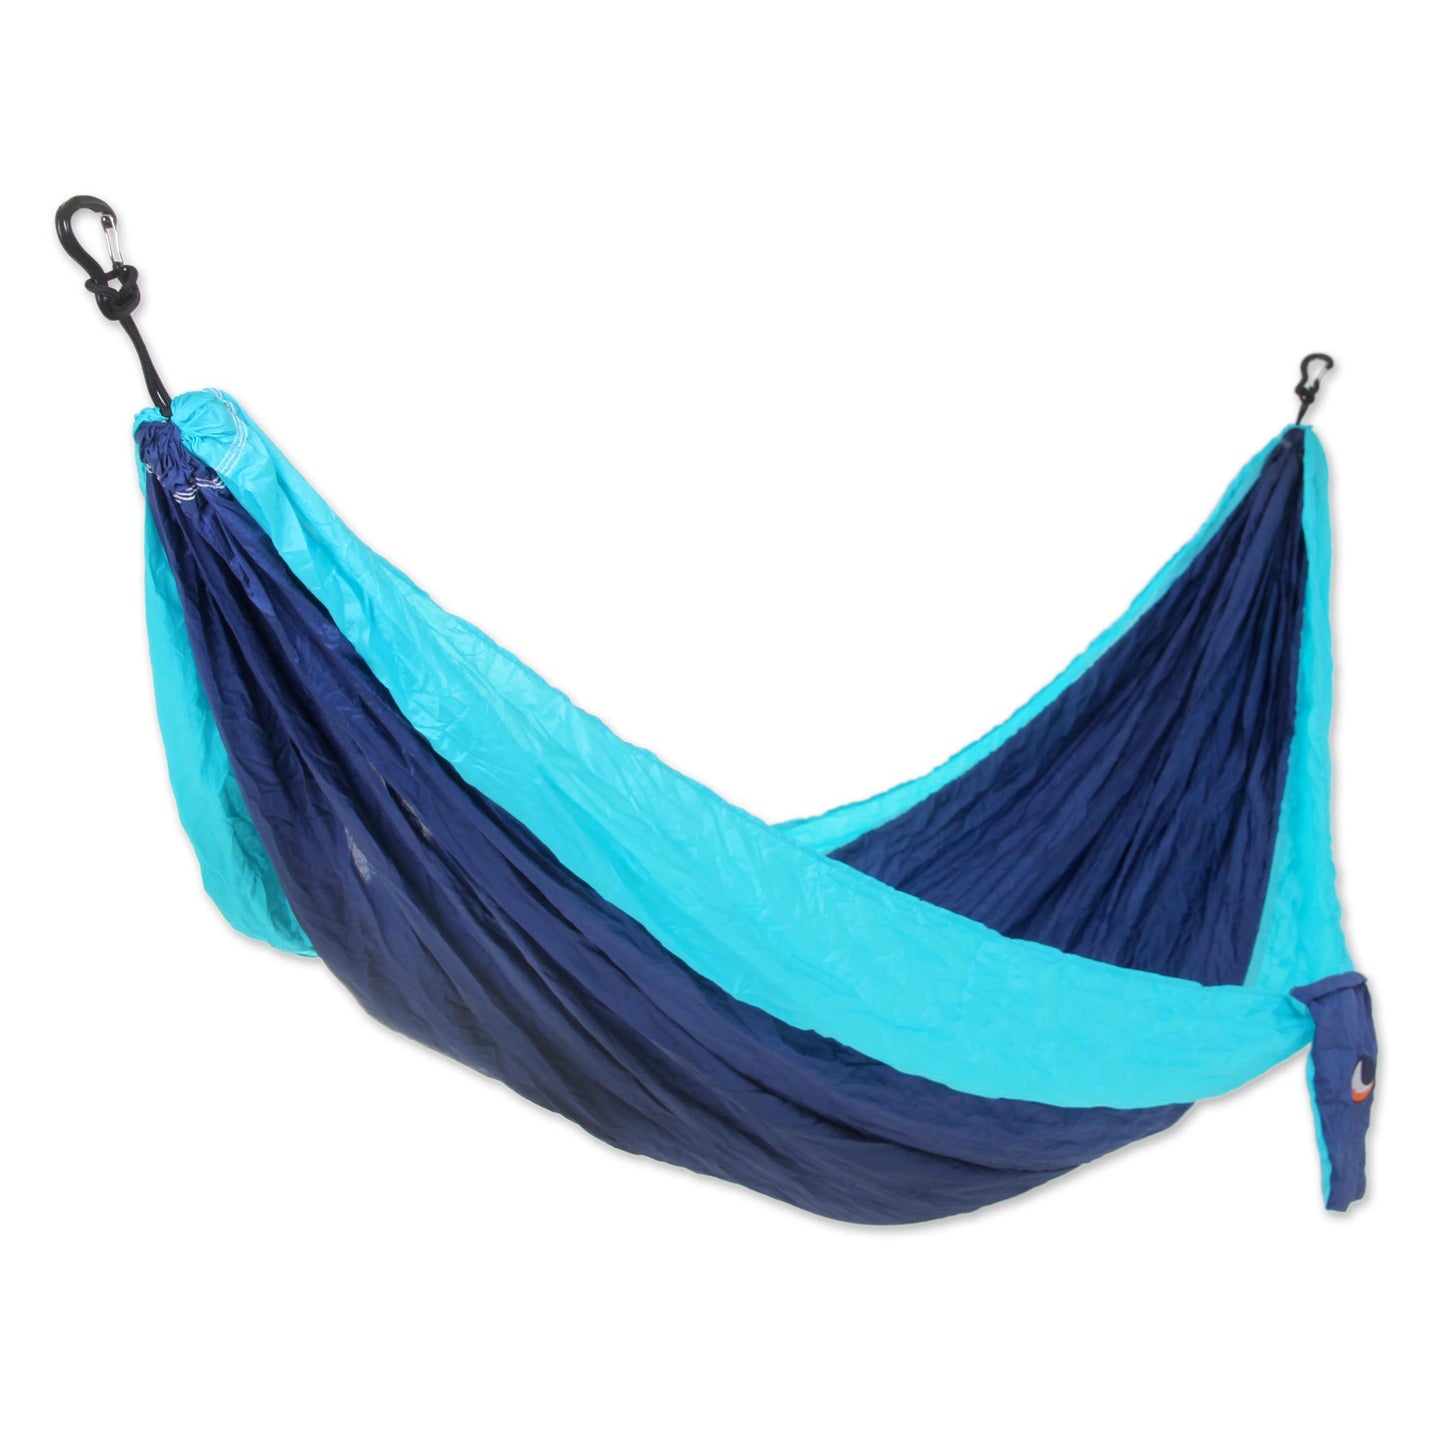 Sea Dreams Portable Parachute Fabric Hammock Blue Turquoise (Single)